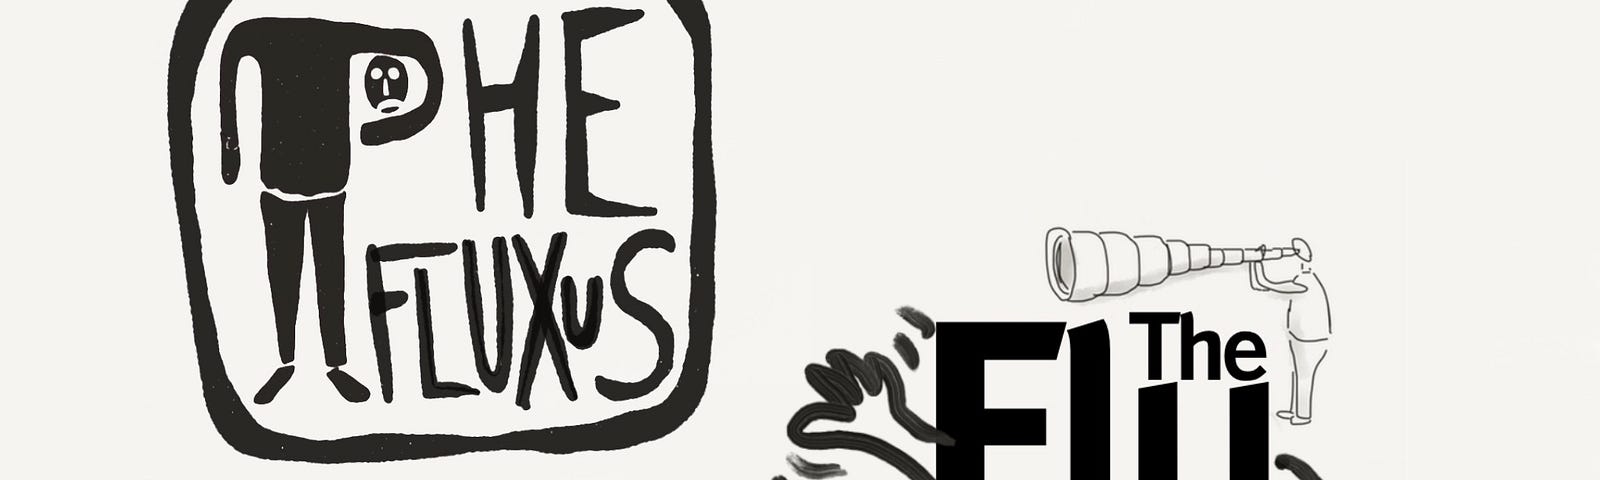 Fluxus logo - Social media & Logos Icons